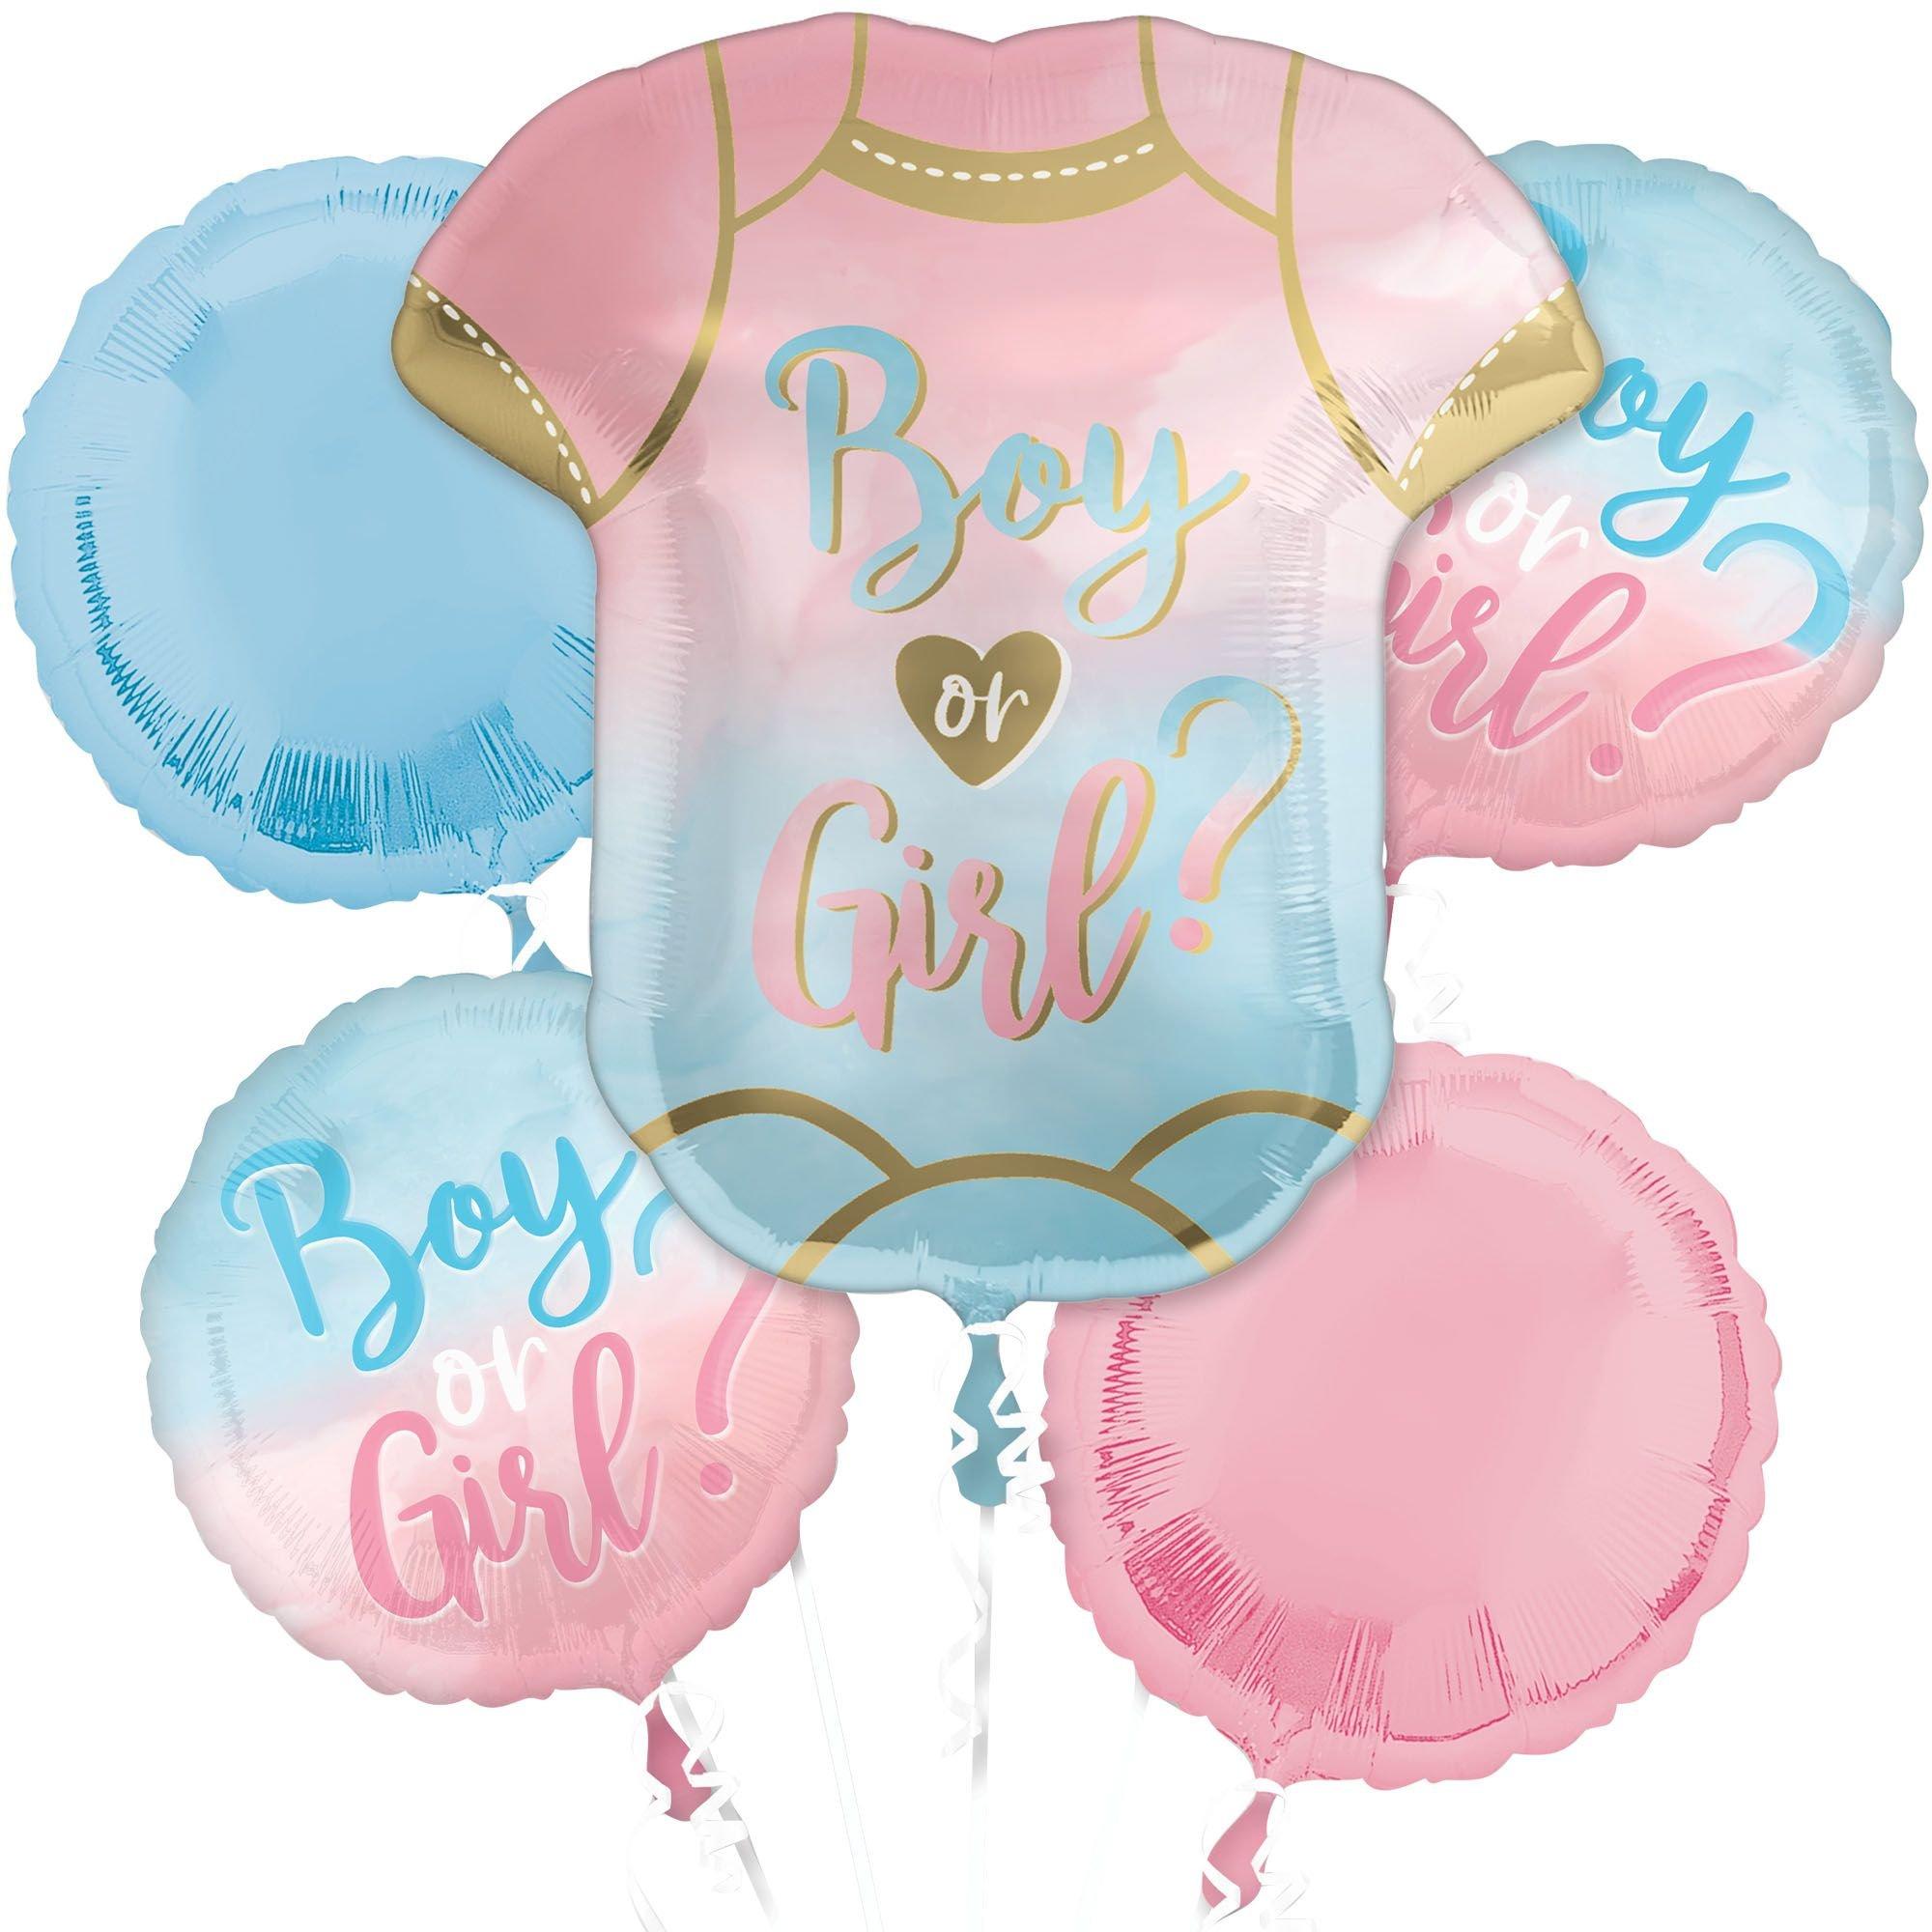 Ballons Gender Reveal Boy or Girl